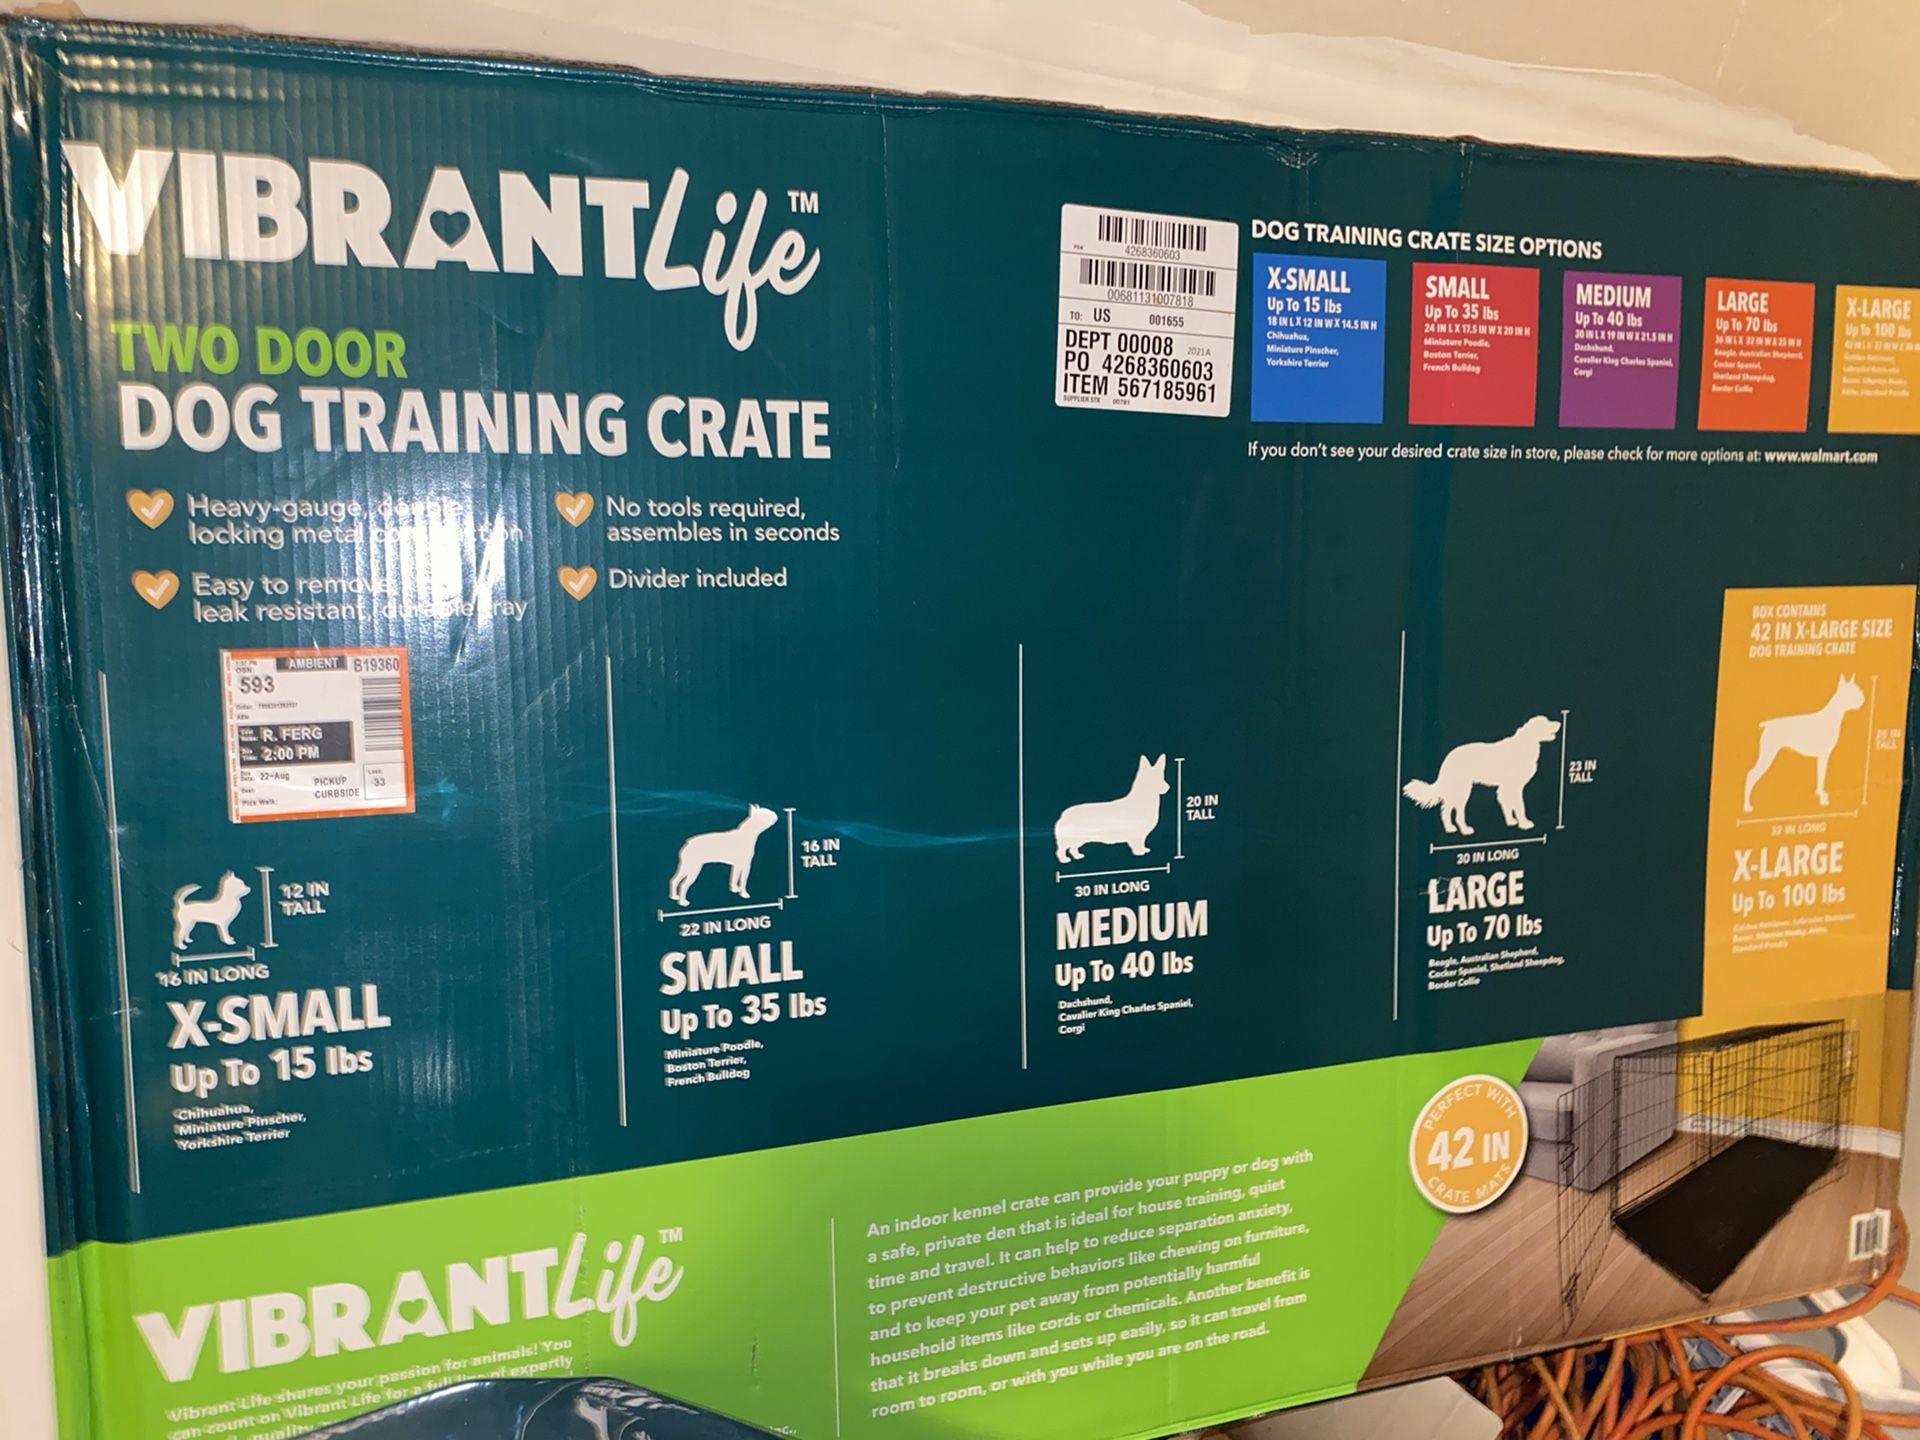 Extra large dog training crate | Practically new